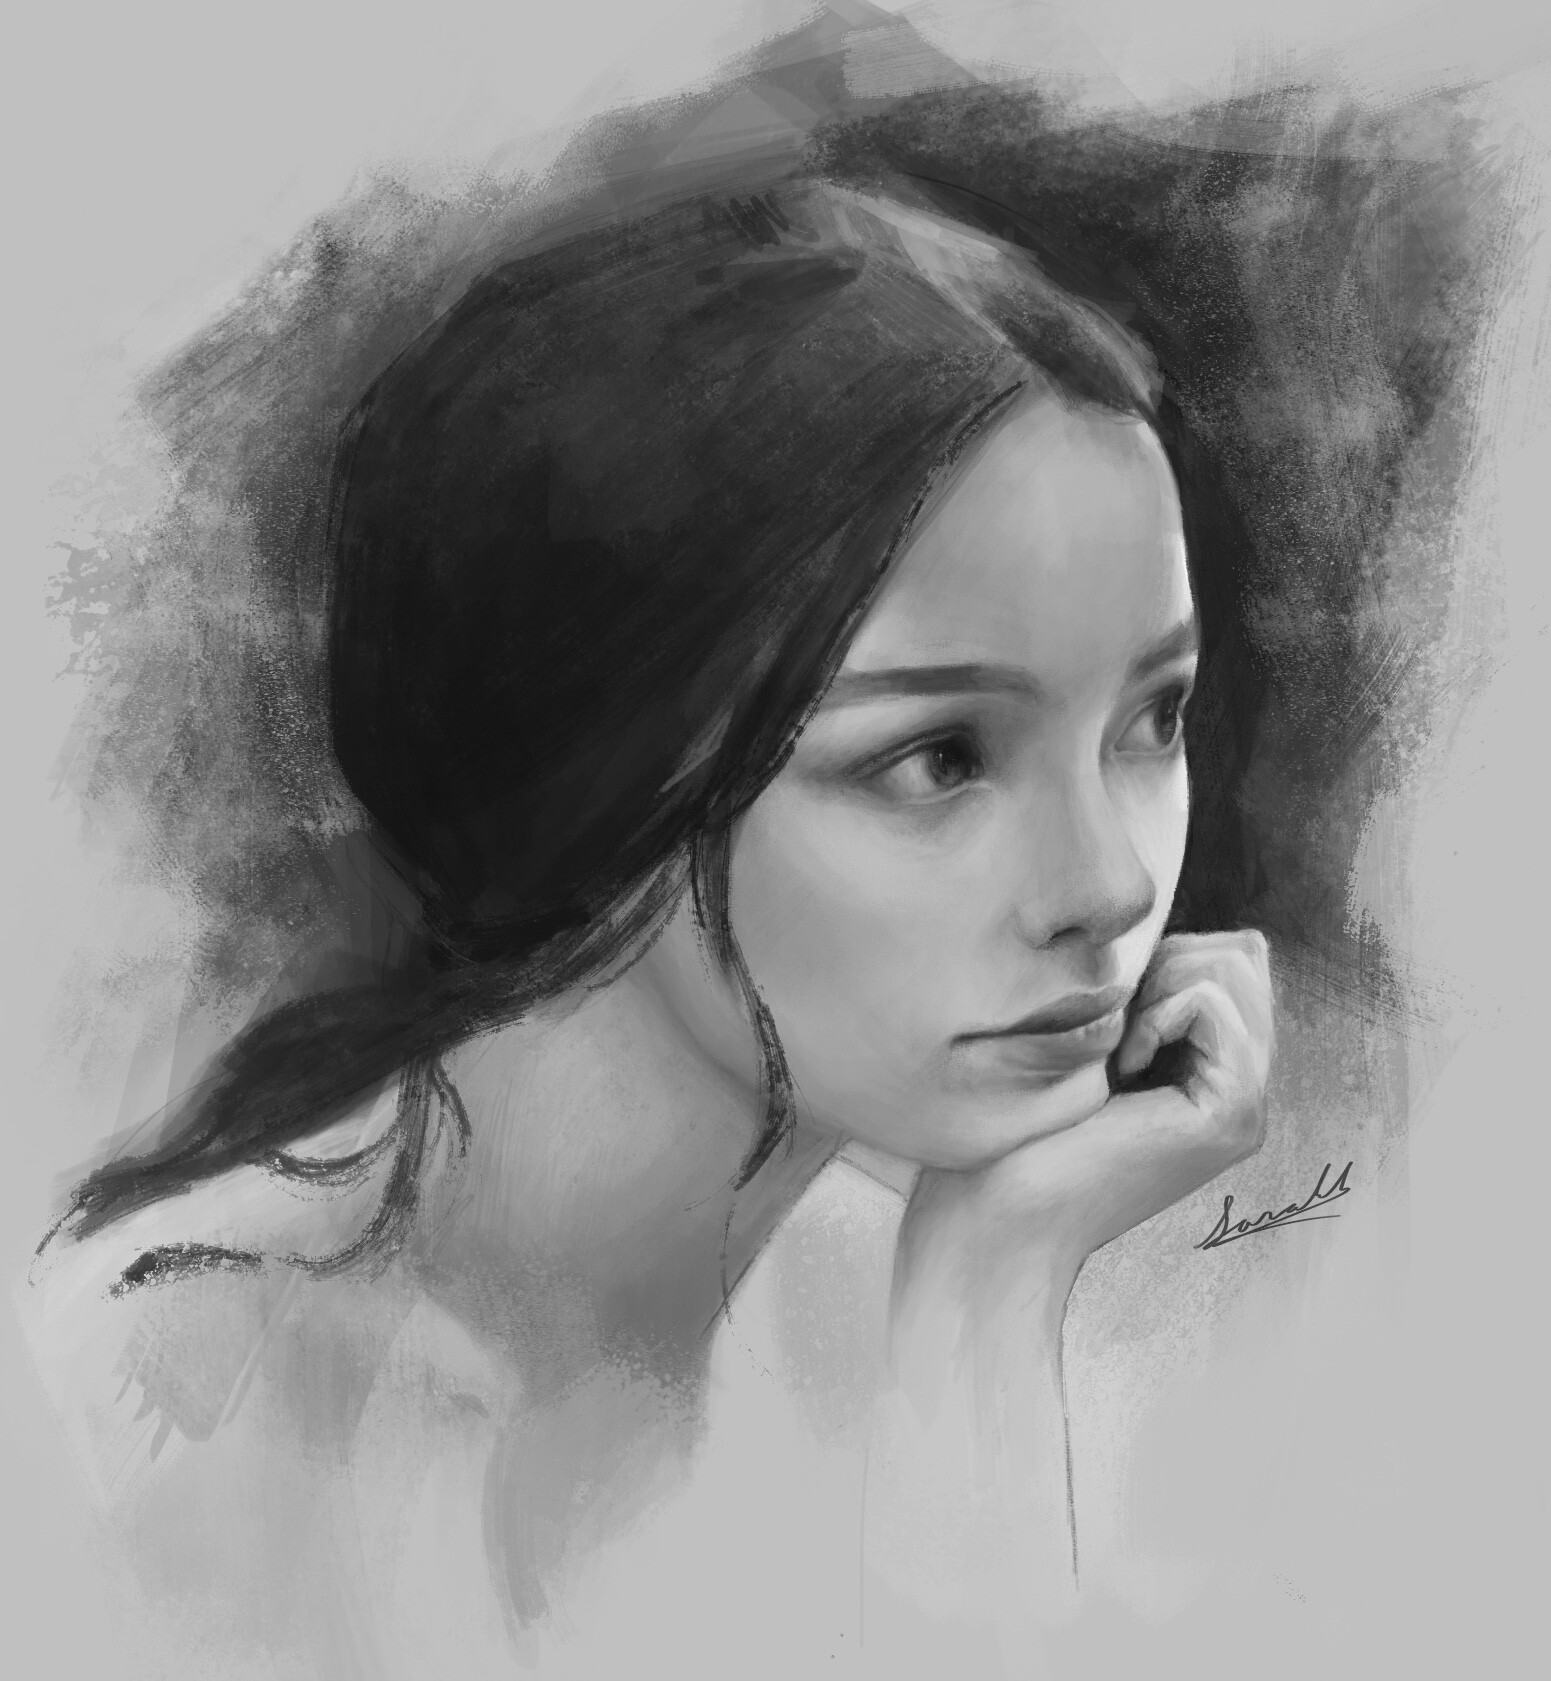 ArtStation - Black and White Portrait Study